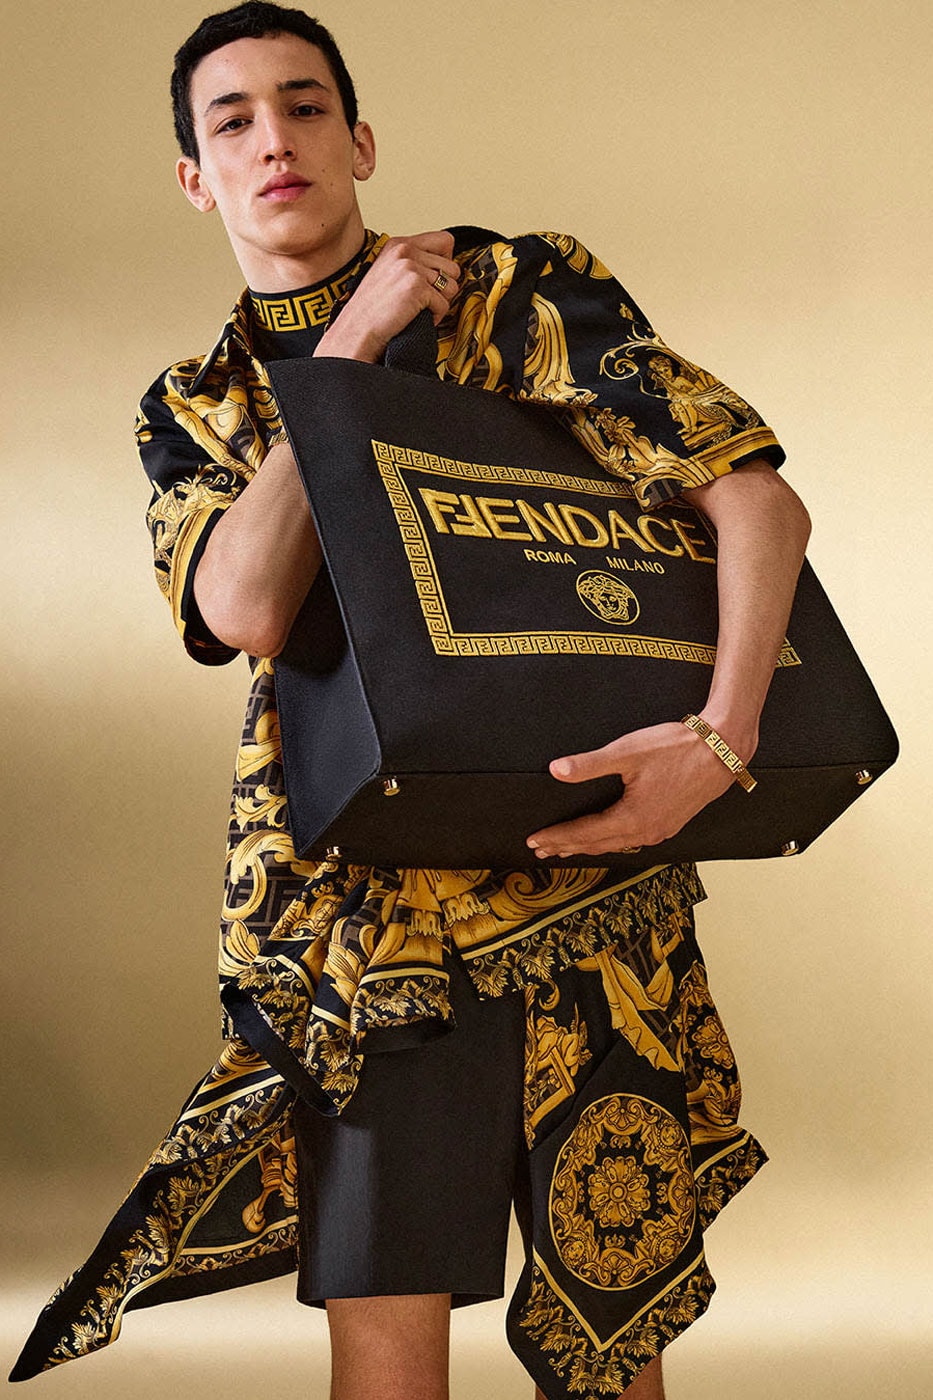 Fendi and Versace Has Officially Released Its Fendace Collection Donatella Versace, Silvia Venturini Fendi, and Kim Jonesnaomi cambpell Adut Akech, Amar Akway, Anja Rubik, Anok Yai, Imaan Hammam milan fashion week